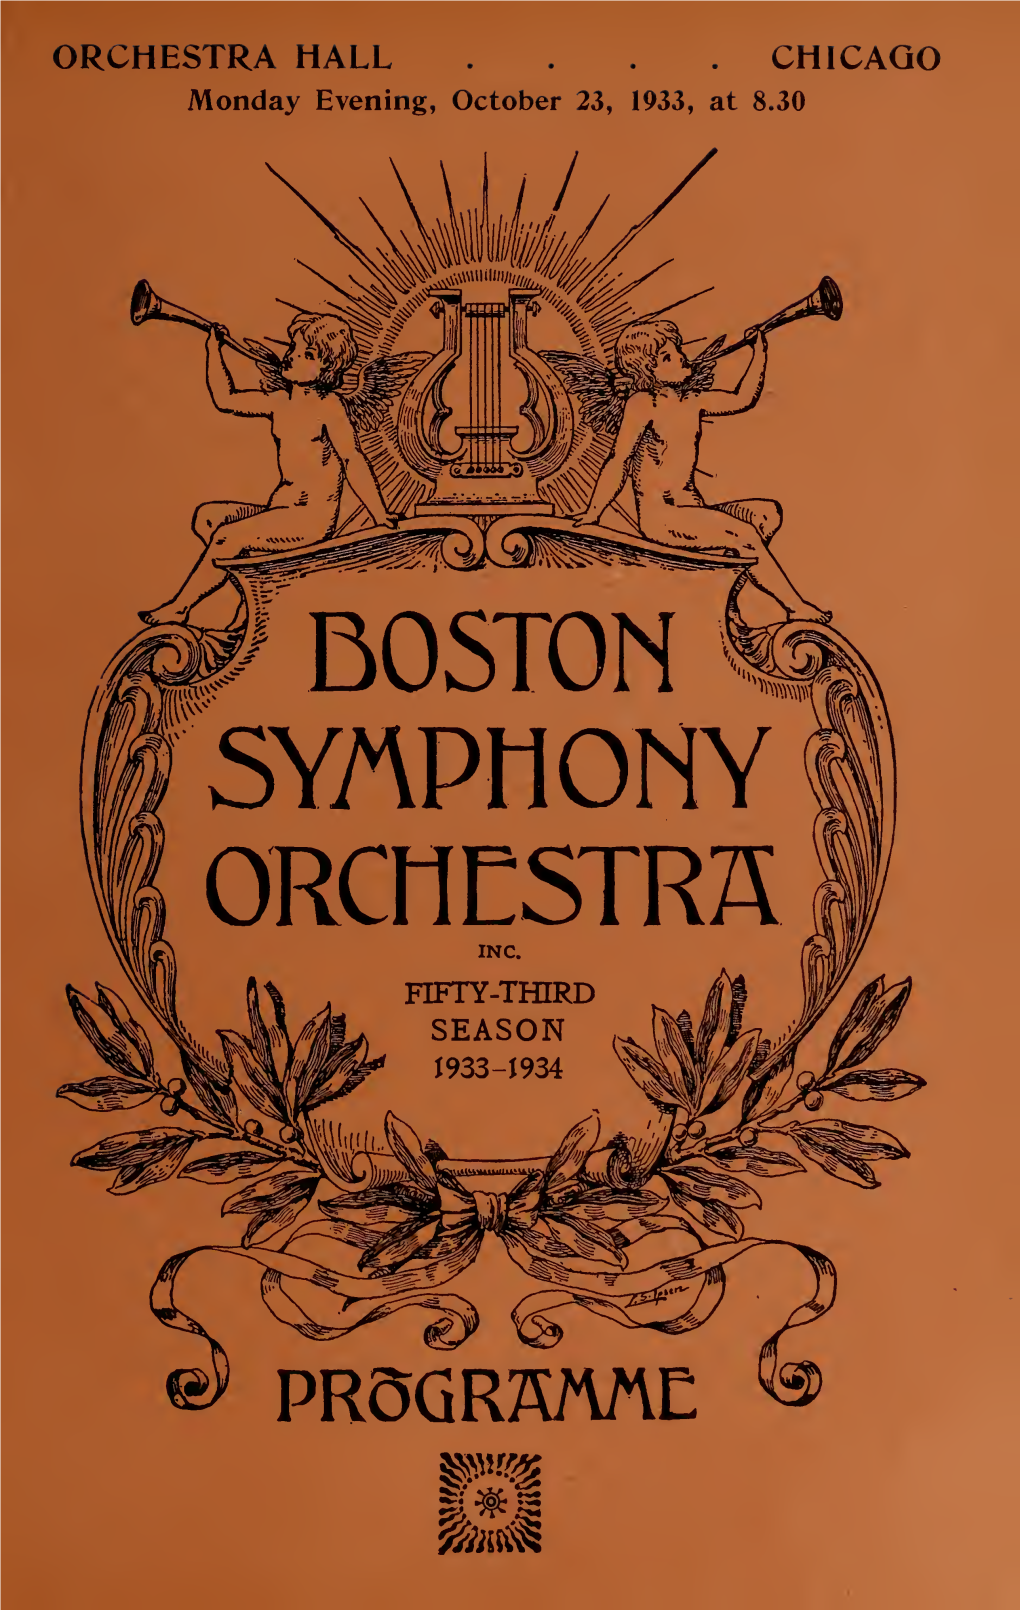 Boston Symphony Orchestra Concert Programs, Season 53,1933-1934, Trip